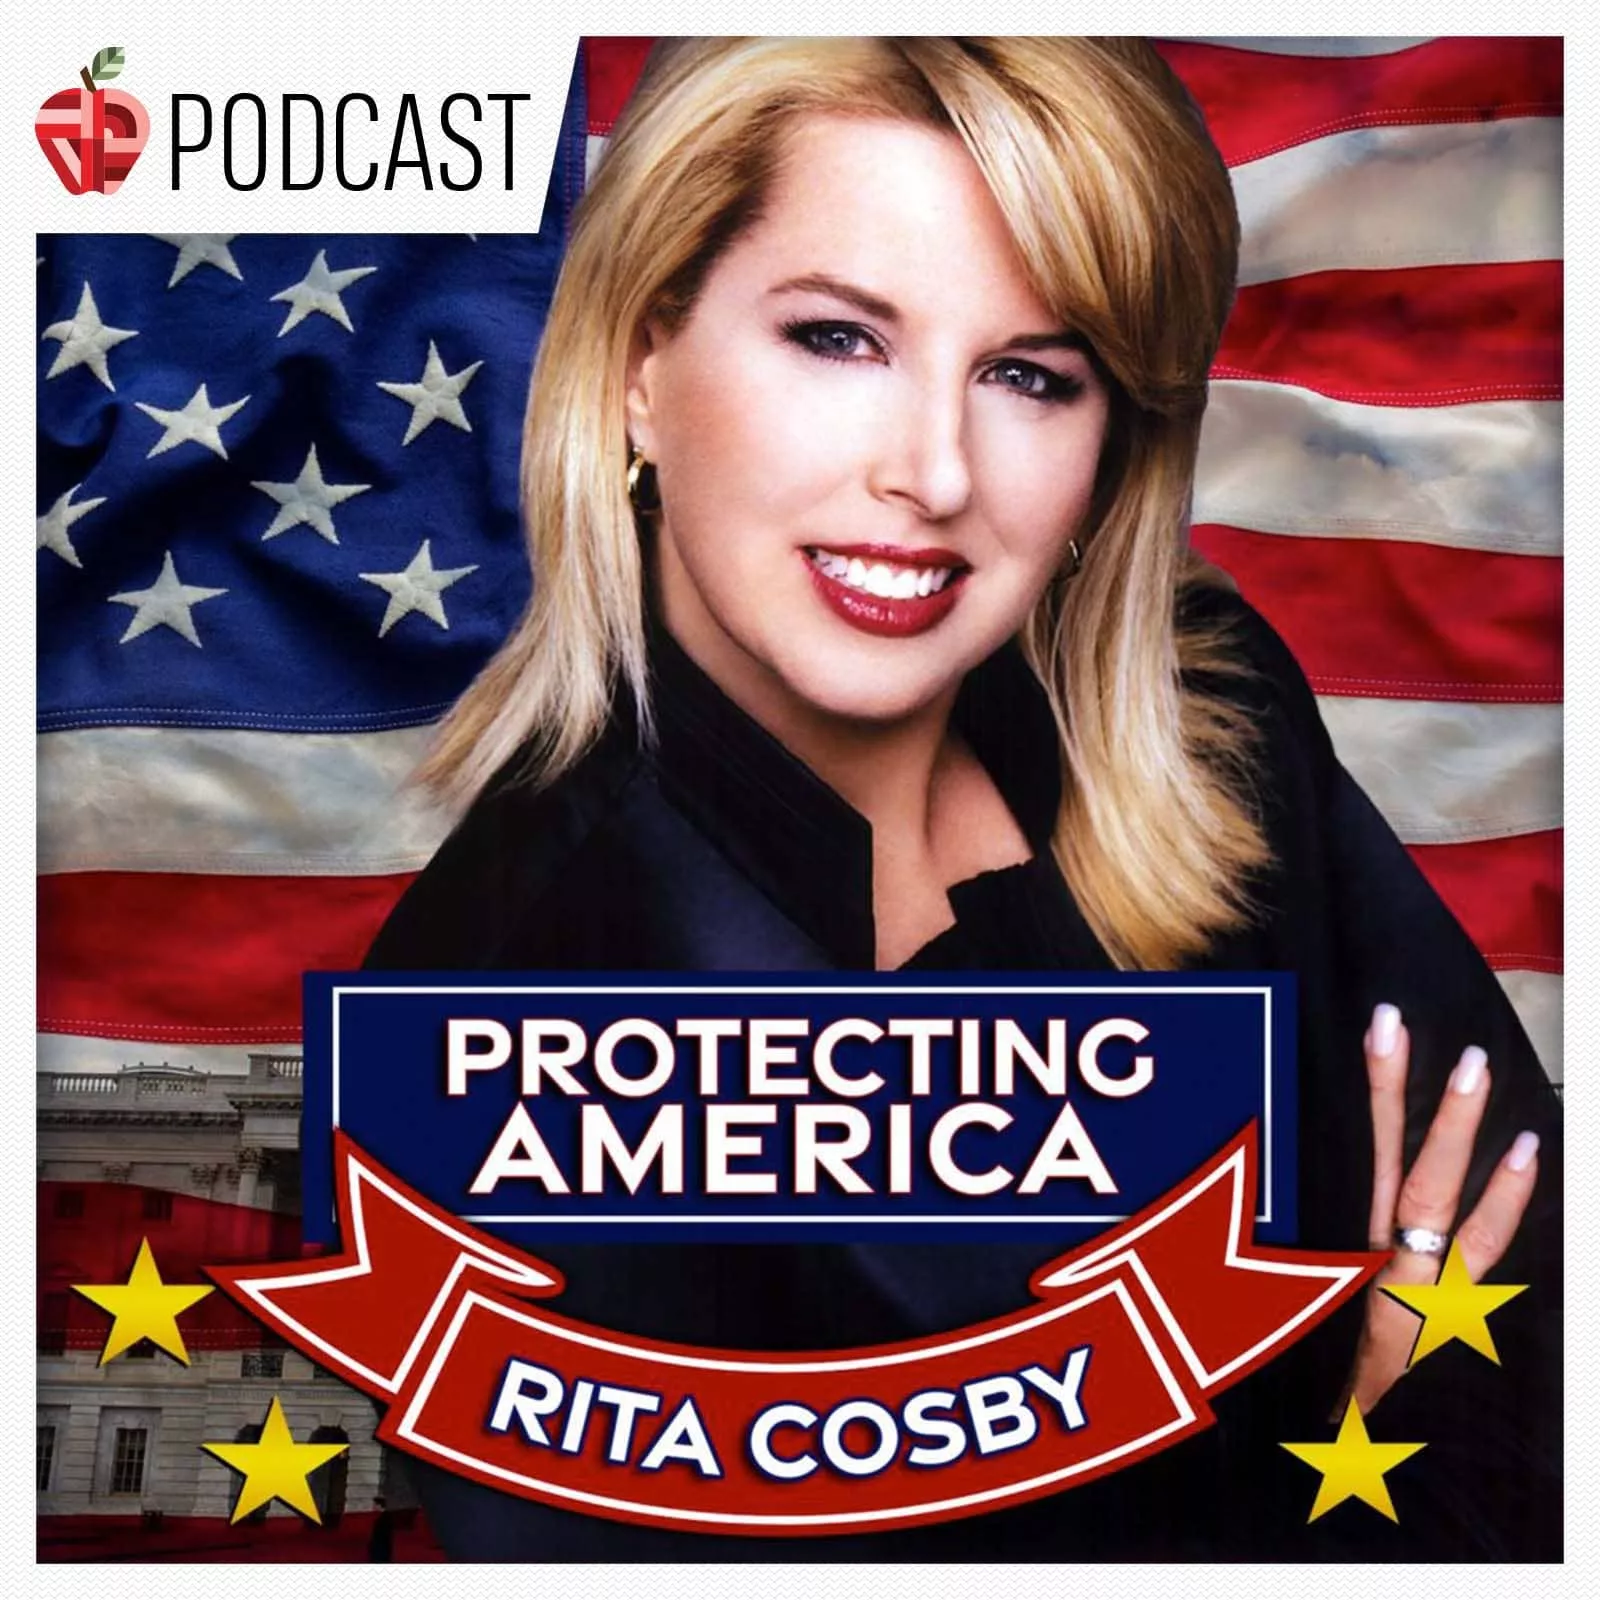 rita-cosby-protecting-america-correct-podcast-new-logo970301